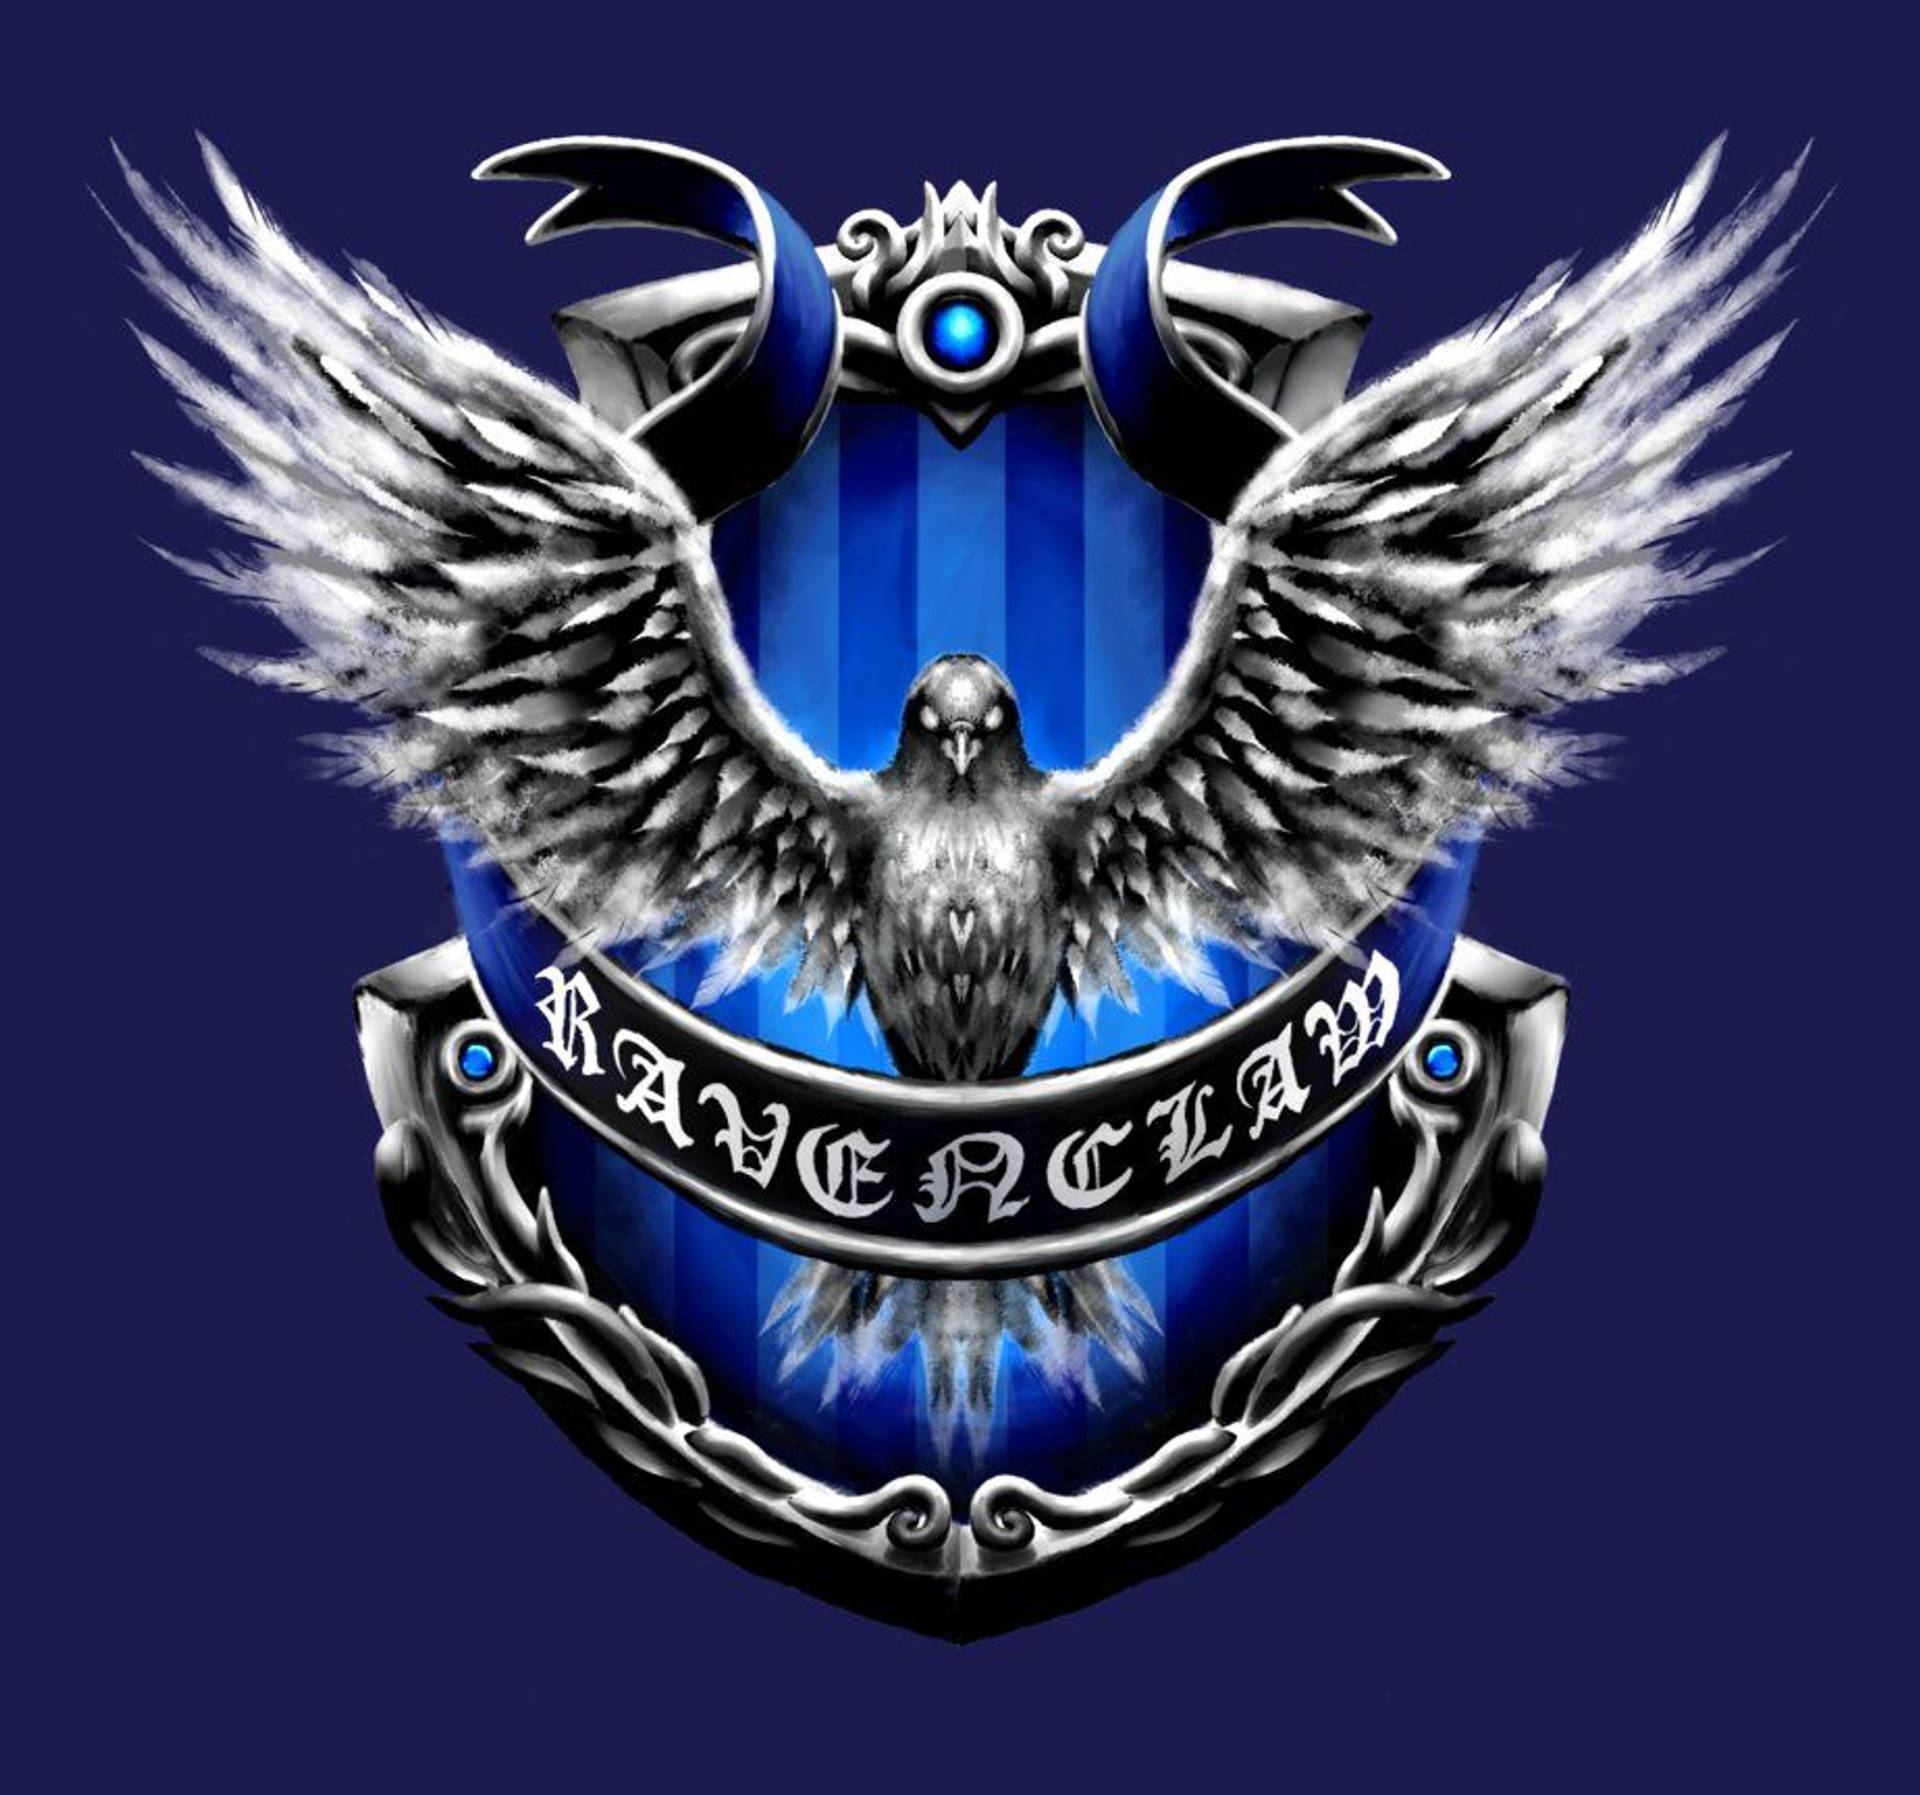 Download Harry Potter Ravenclaw Badge Wallpaper